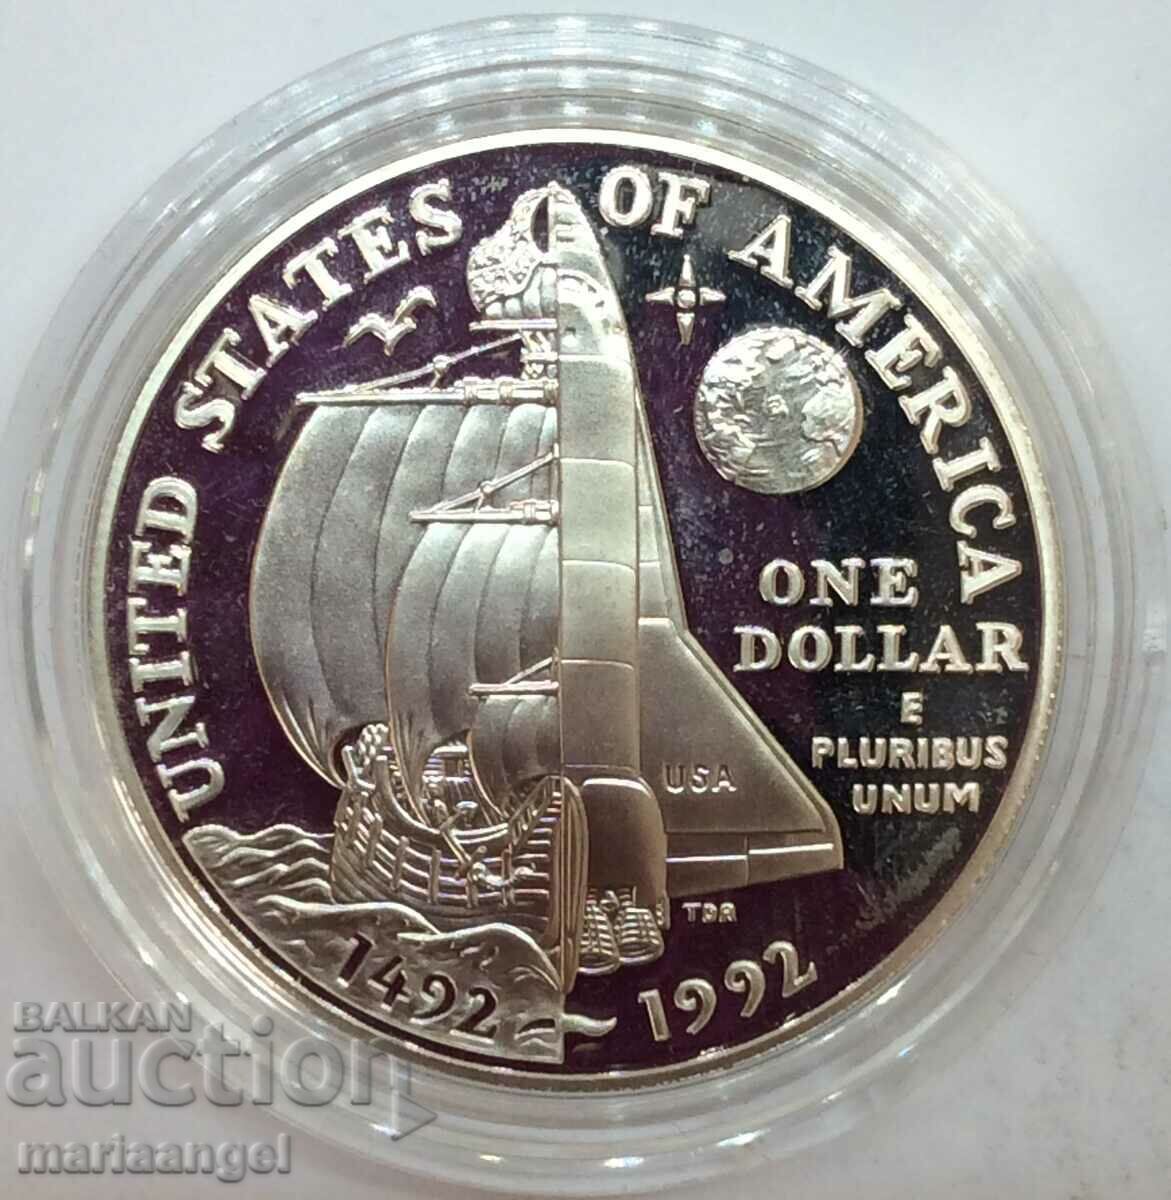 US $1 1992 Anniversary - 500 Years of Columbus UNC PROOF capsule